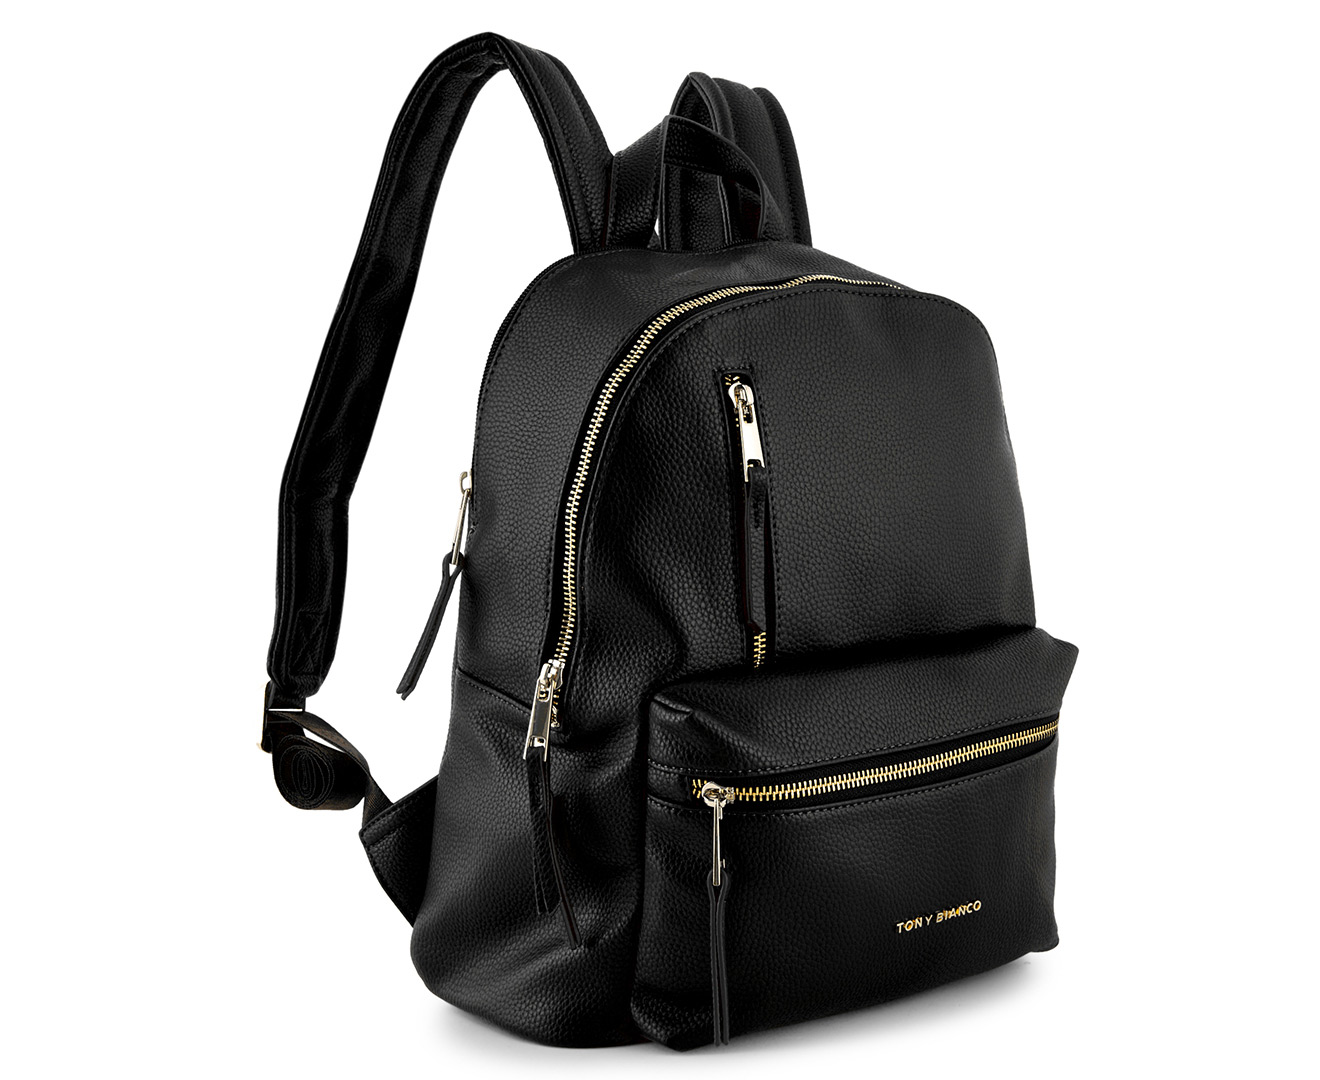 Tony Bianco Chevy Nappy Bag Backpack - Black | Catch.co.nz